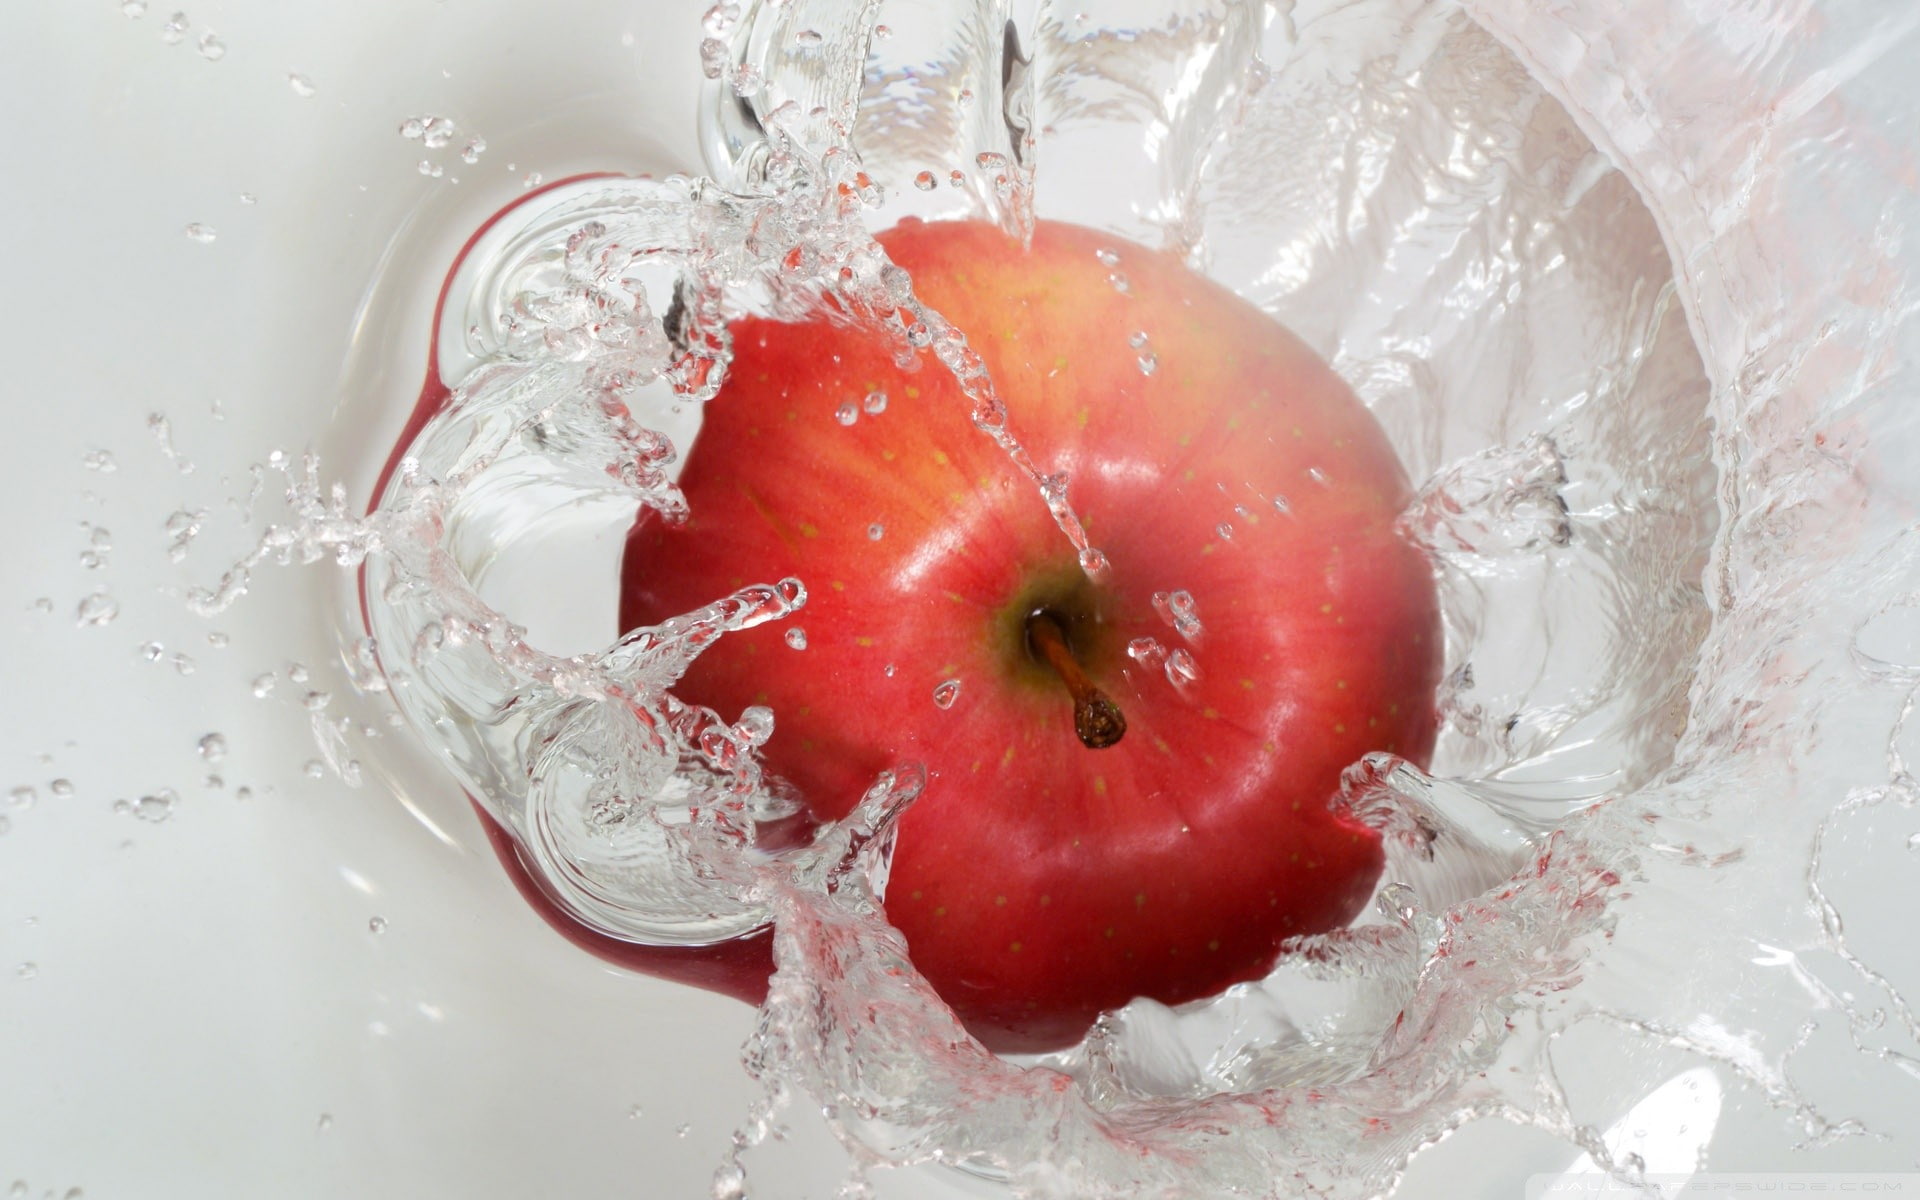 macro, apples, fruit, splashes, water, food and drink, healthy eating